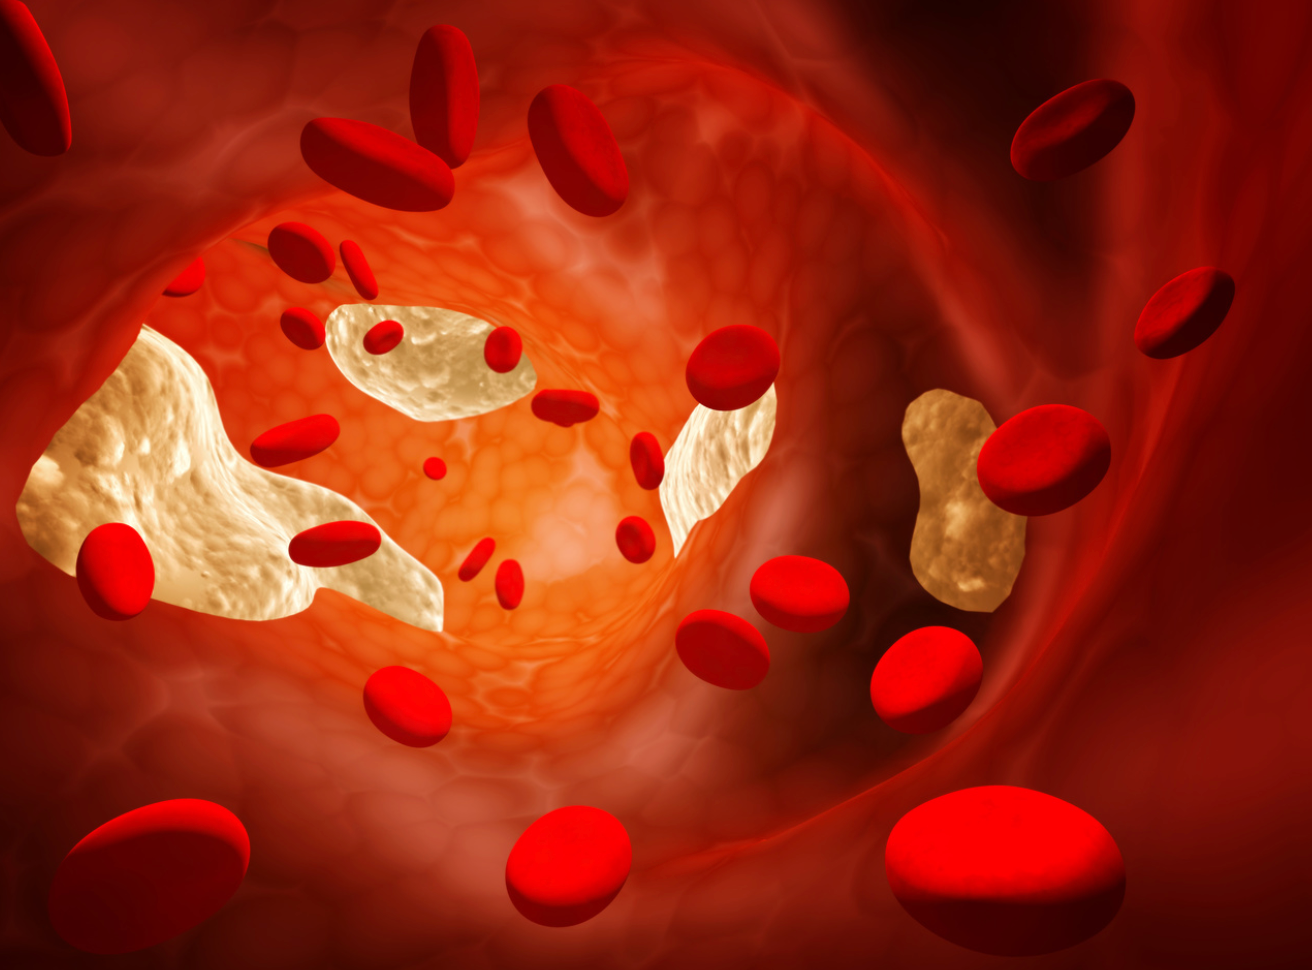 Pharmacist Medication Insights: Evinacumab-dgnb for High Cholesterol